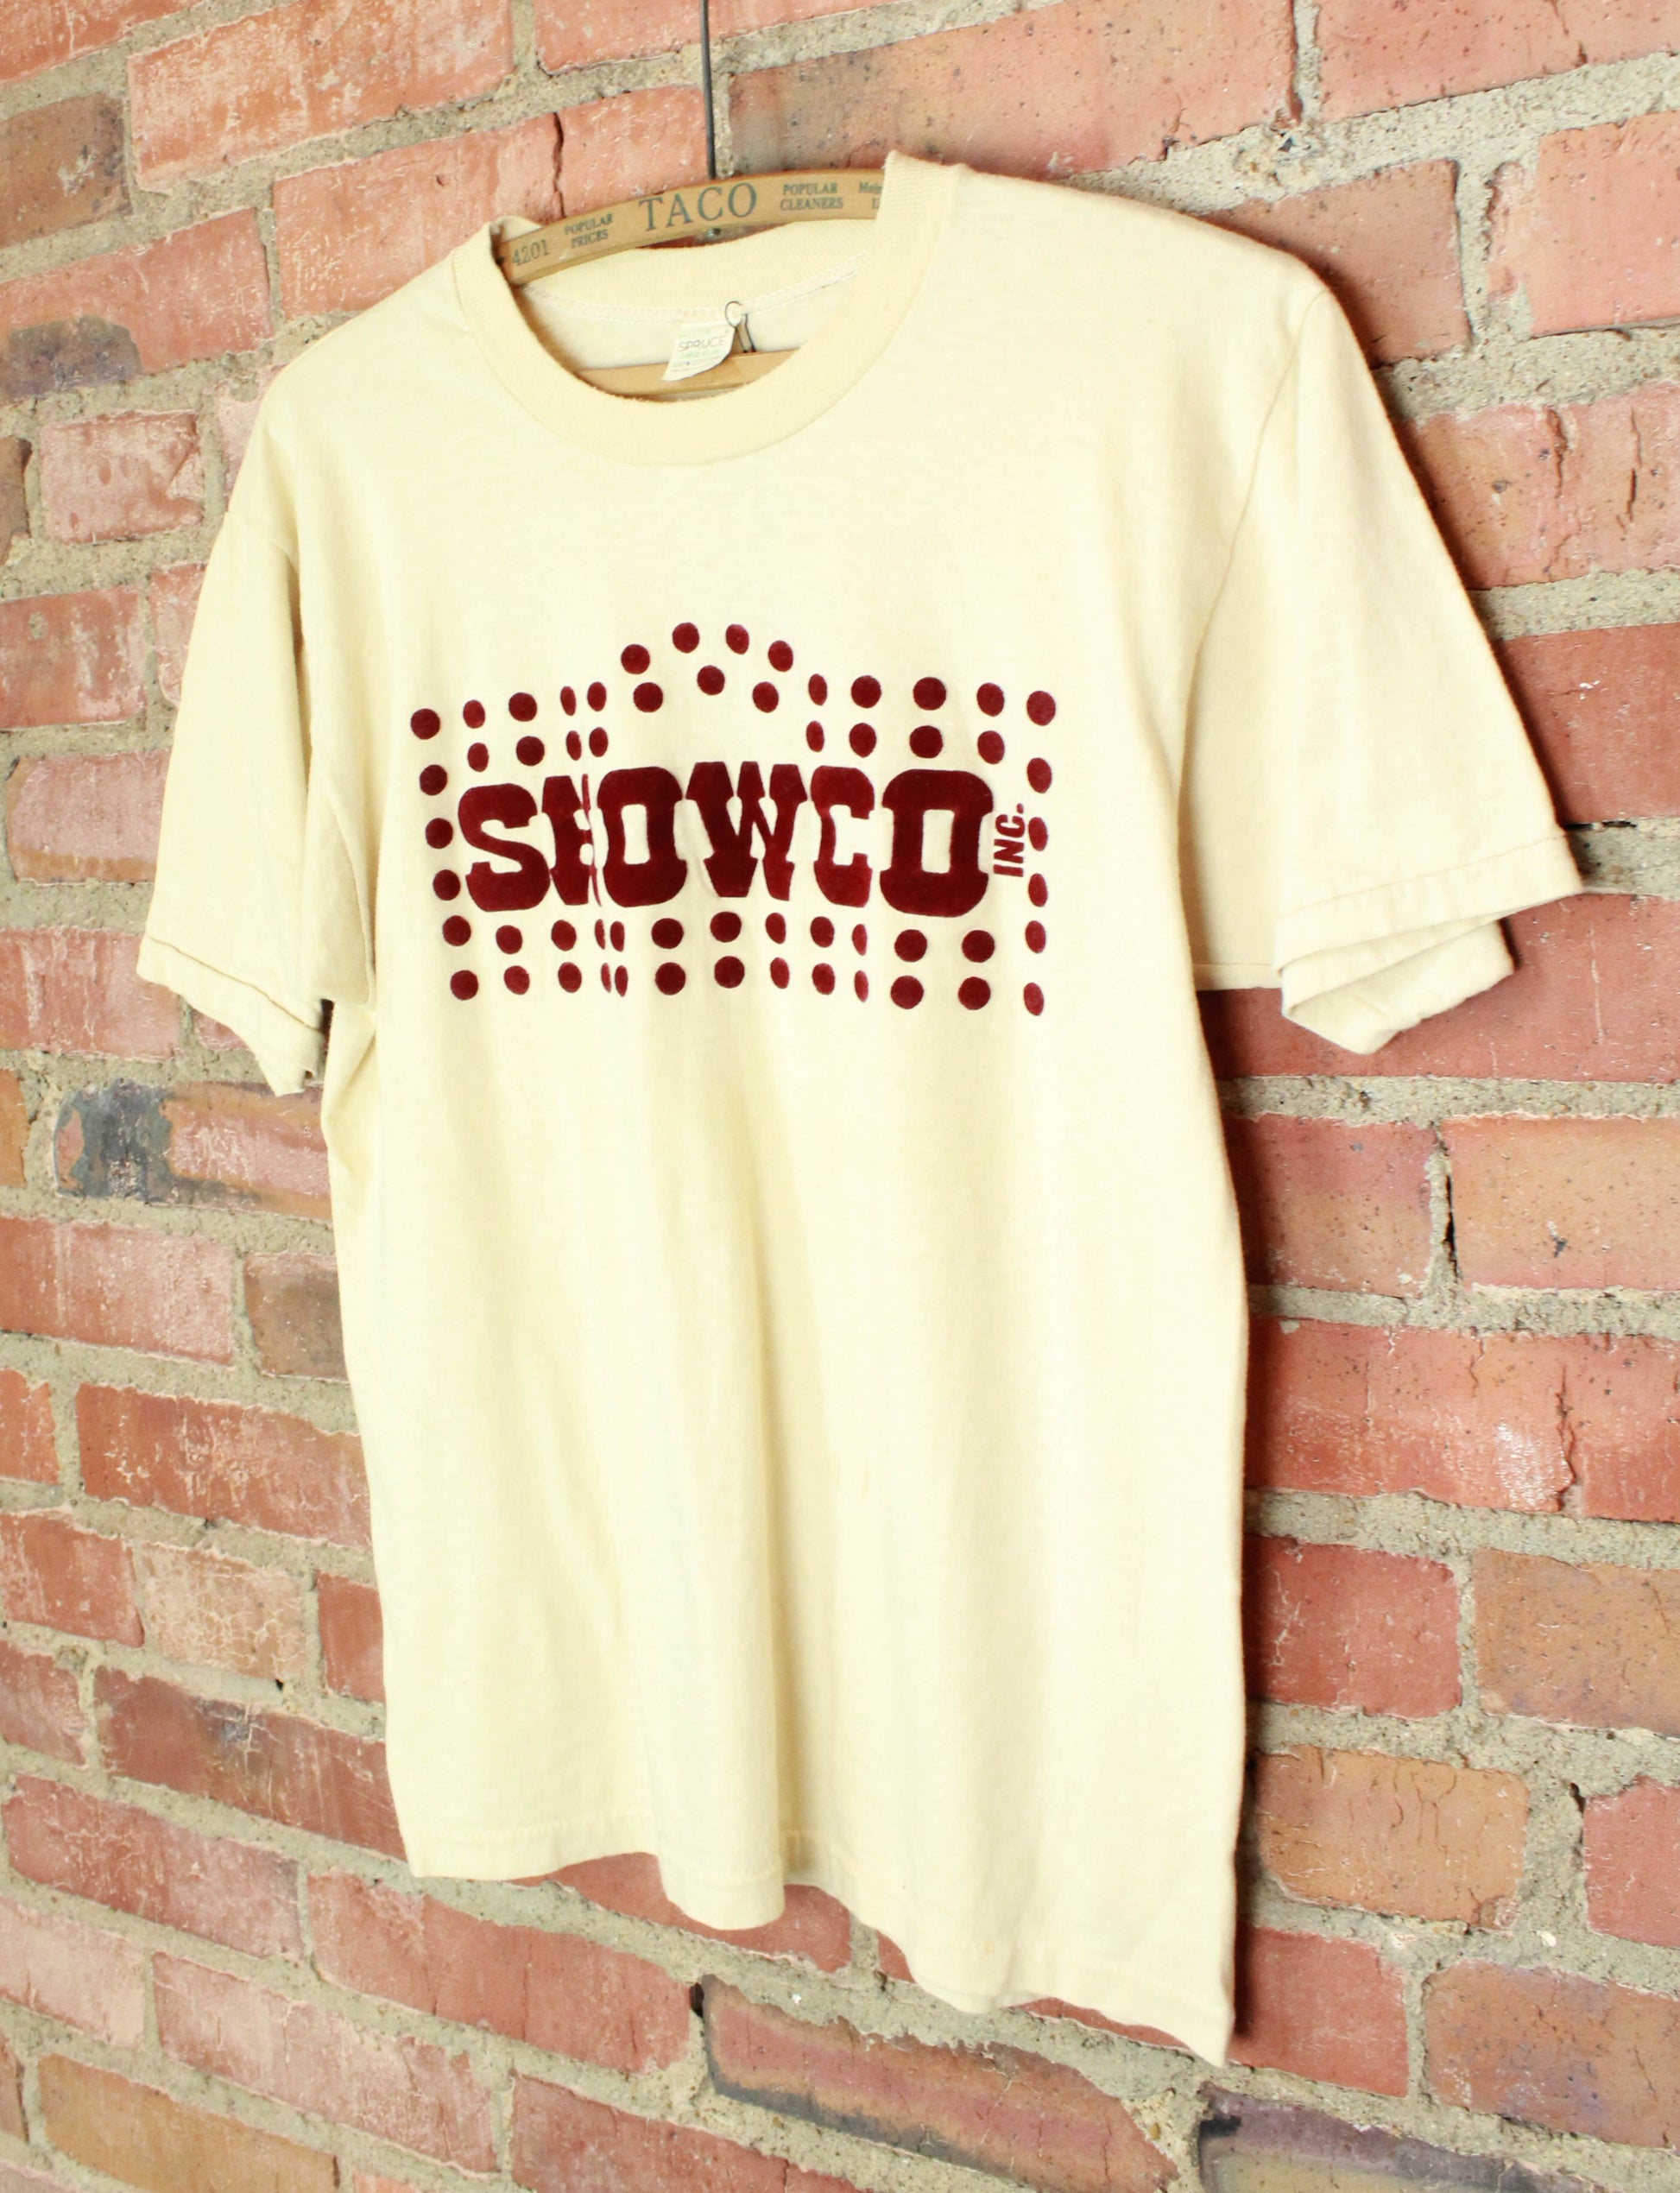 Vintage Showco Concert T Shirt Havana Jam 1979 Unisex Small